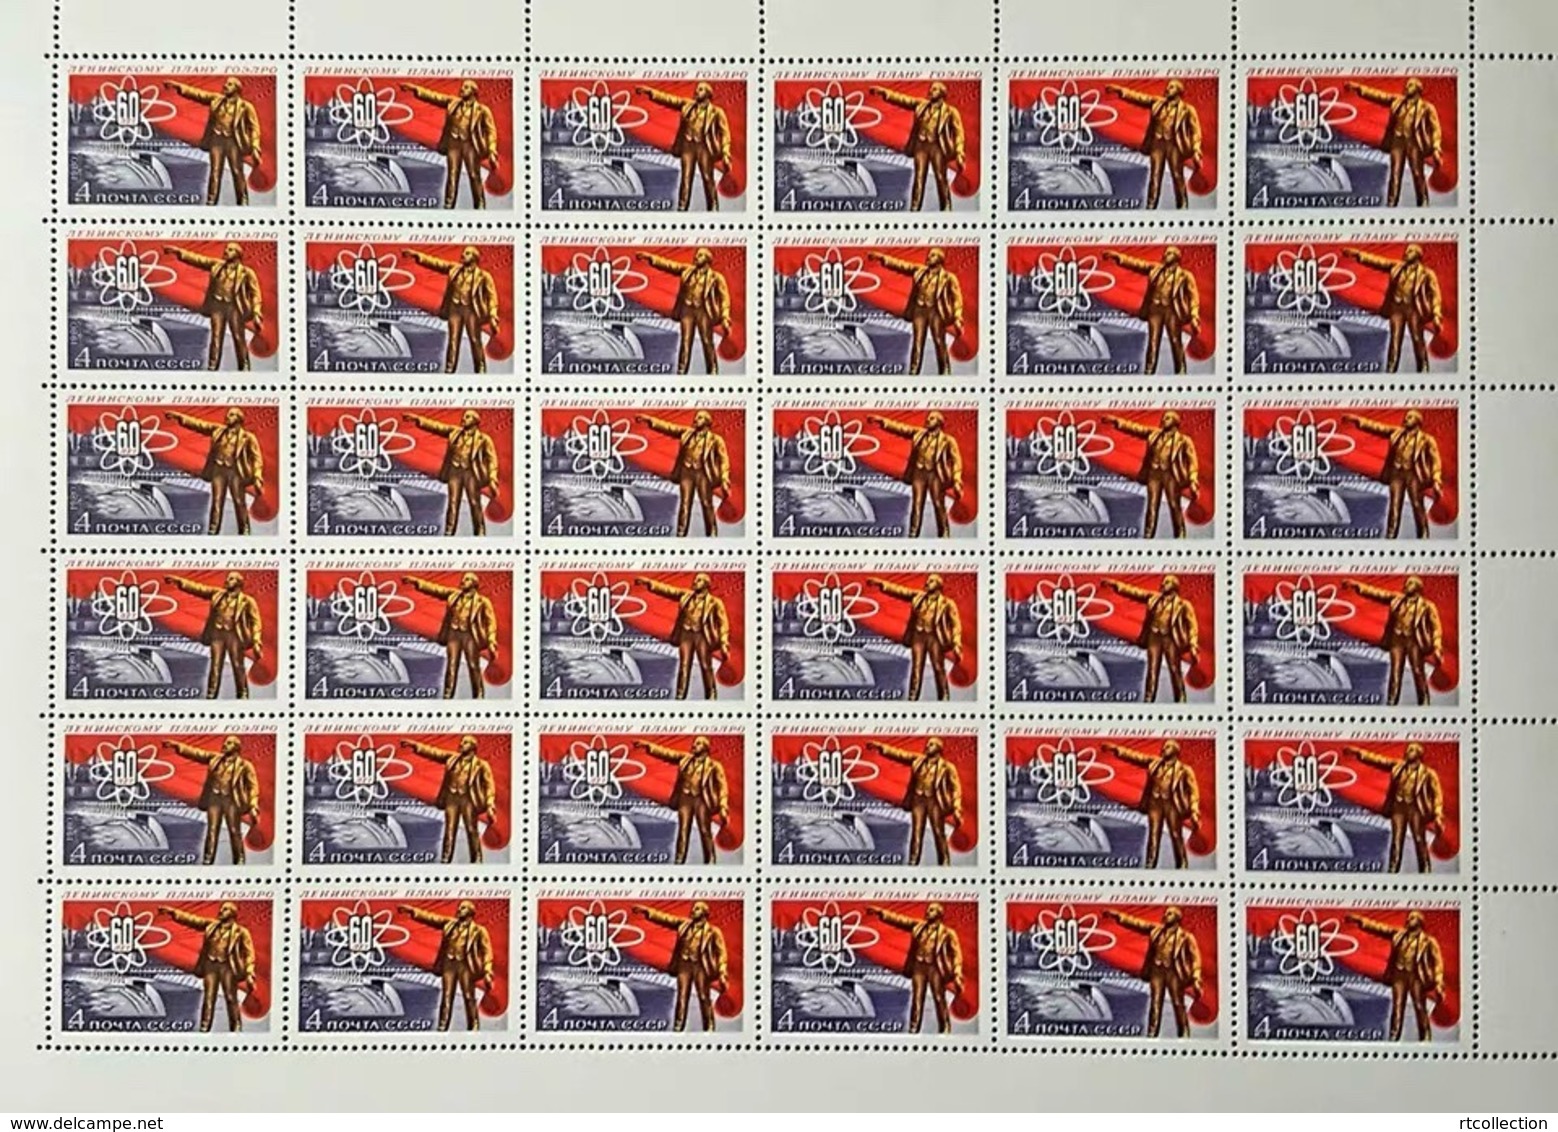 USSR Russia 1980 Sheet 60th Anniv Electrification Plan Lenin Famous People Politician Celebrations Flag Stamps MNH - Lenin